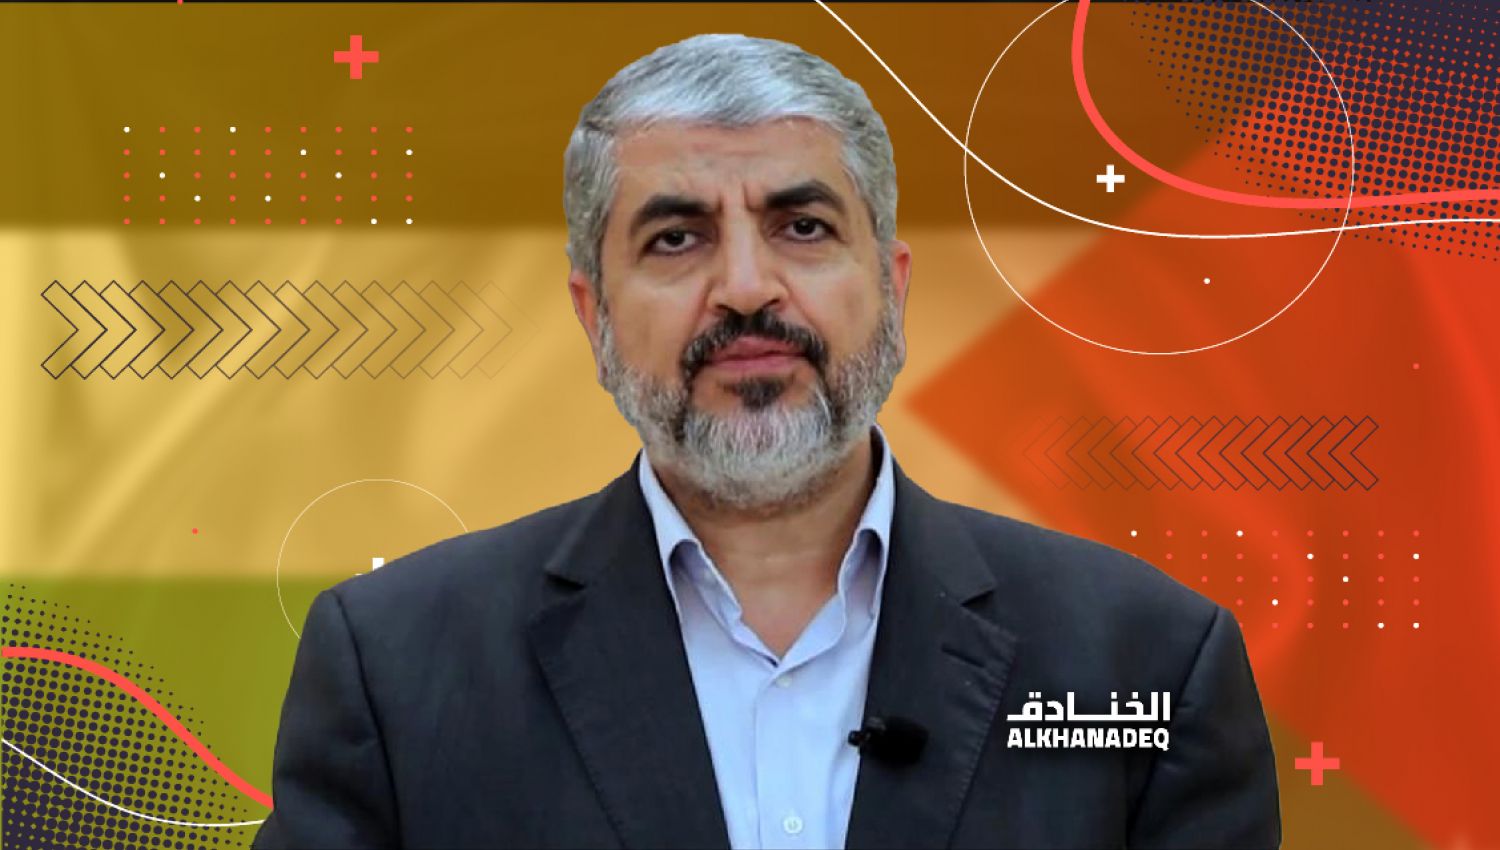 انتخاب خالد مشعل رئيسًا لإقليم "خارج فلسطين" في حماس 